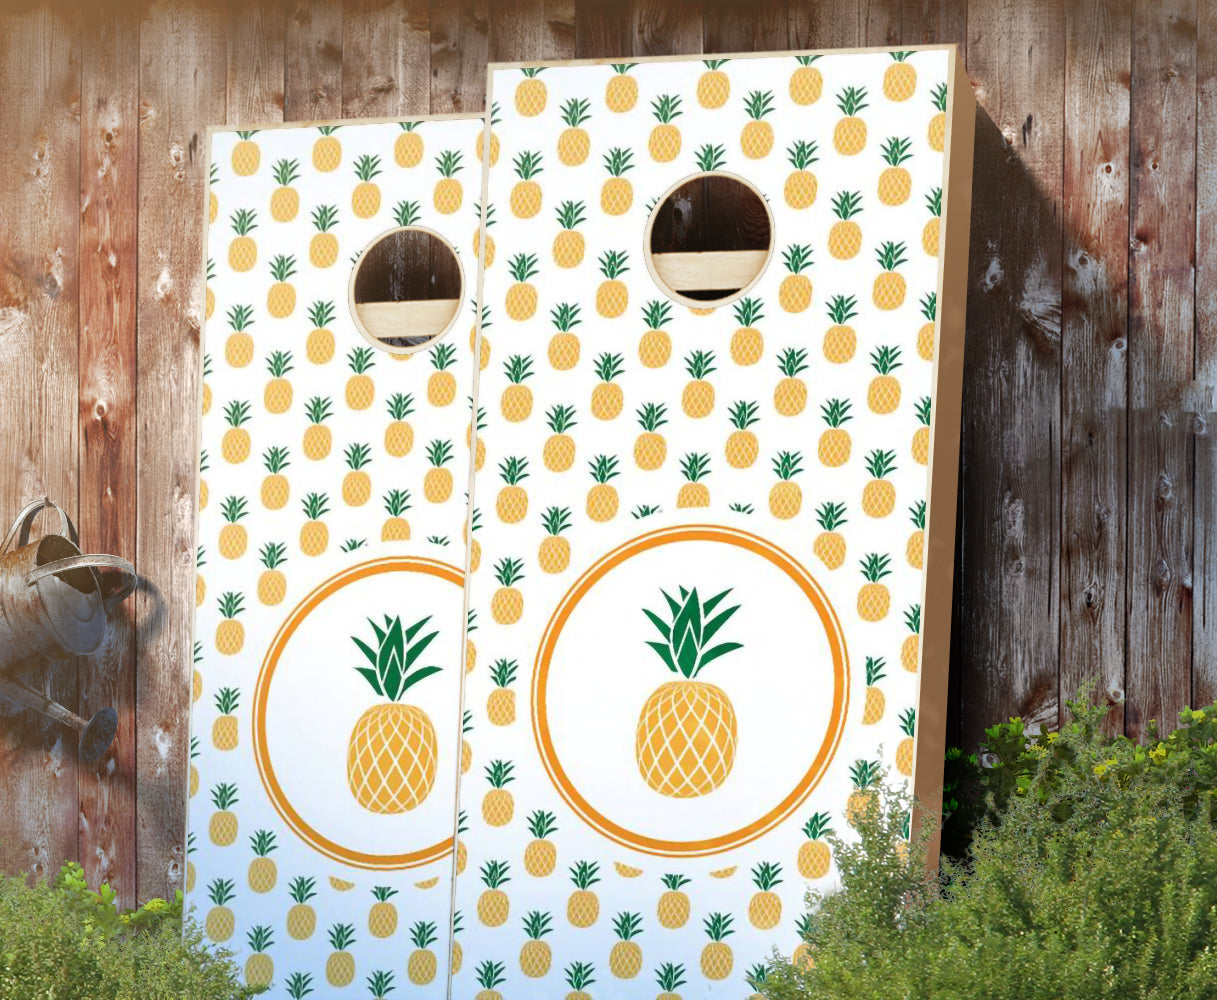 "Pineapple" Cornhole Boards